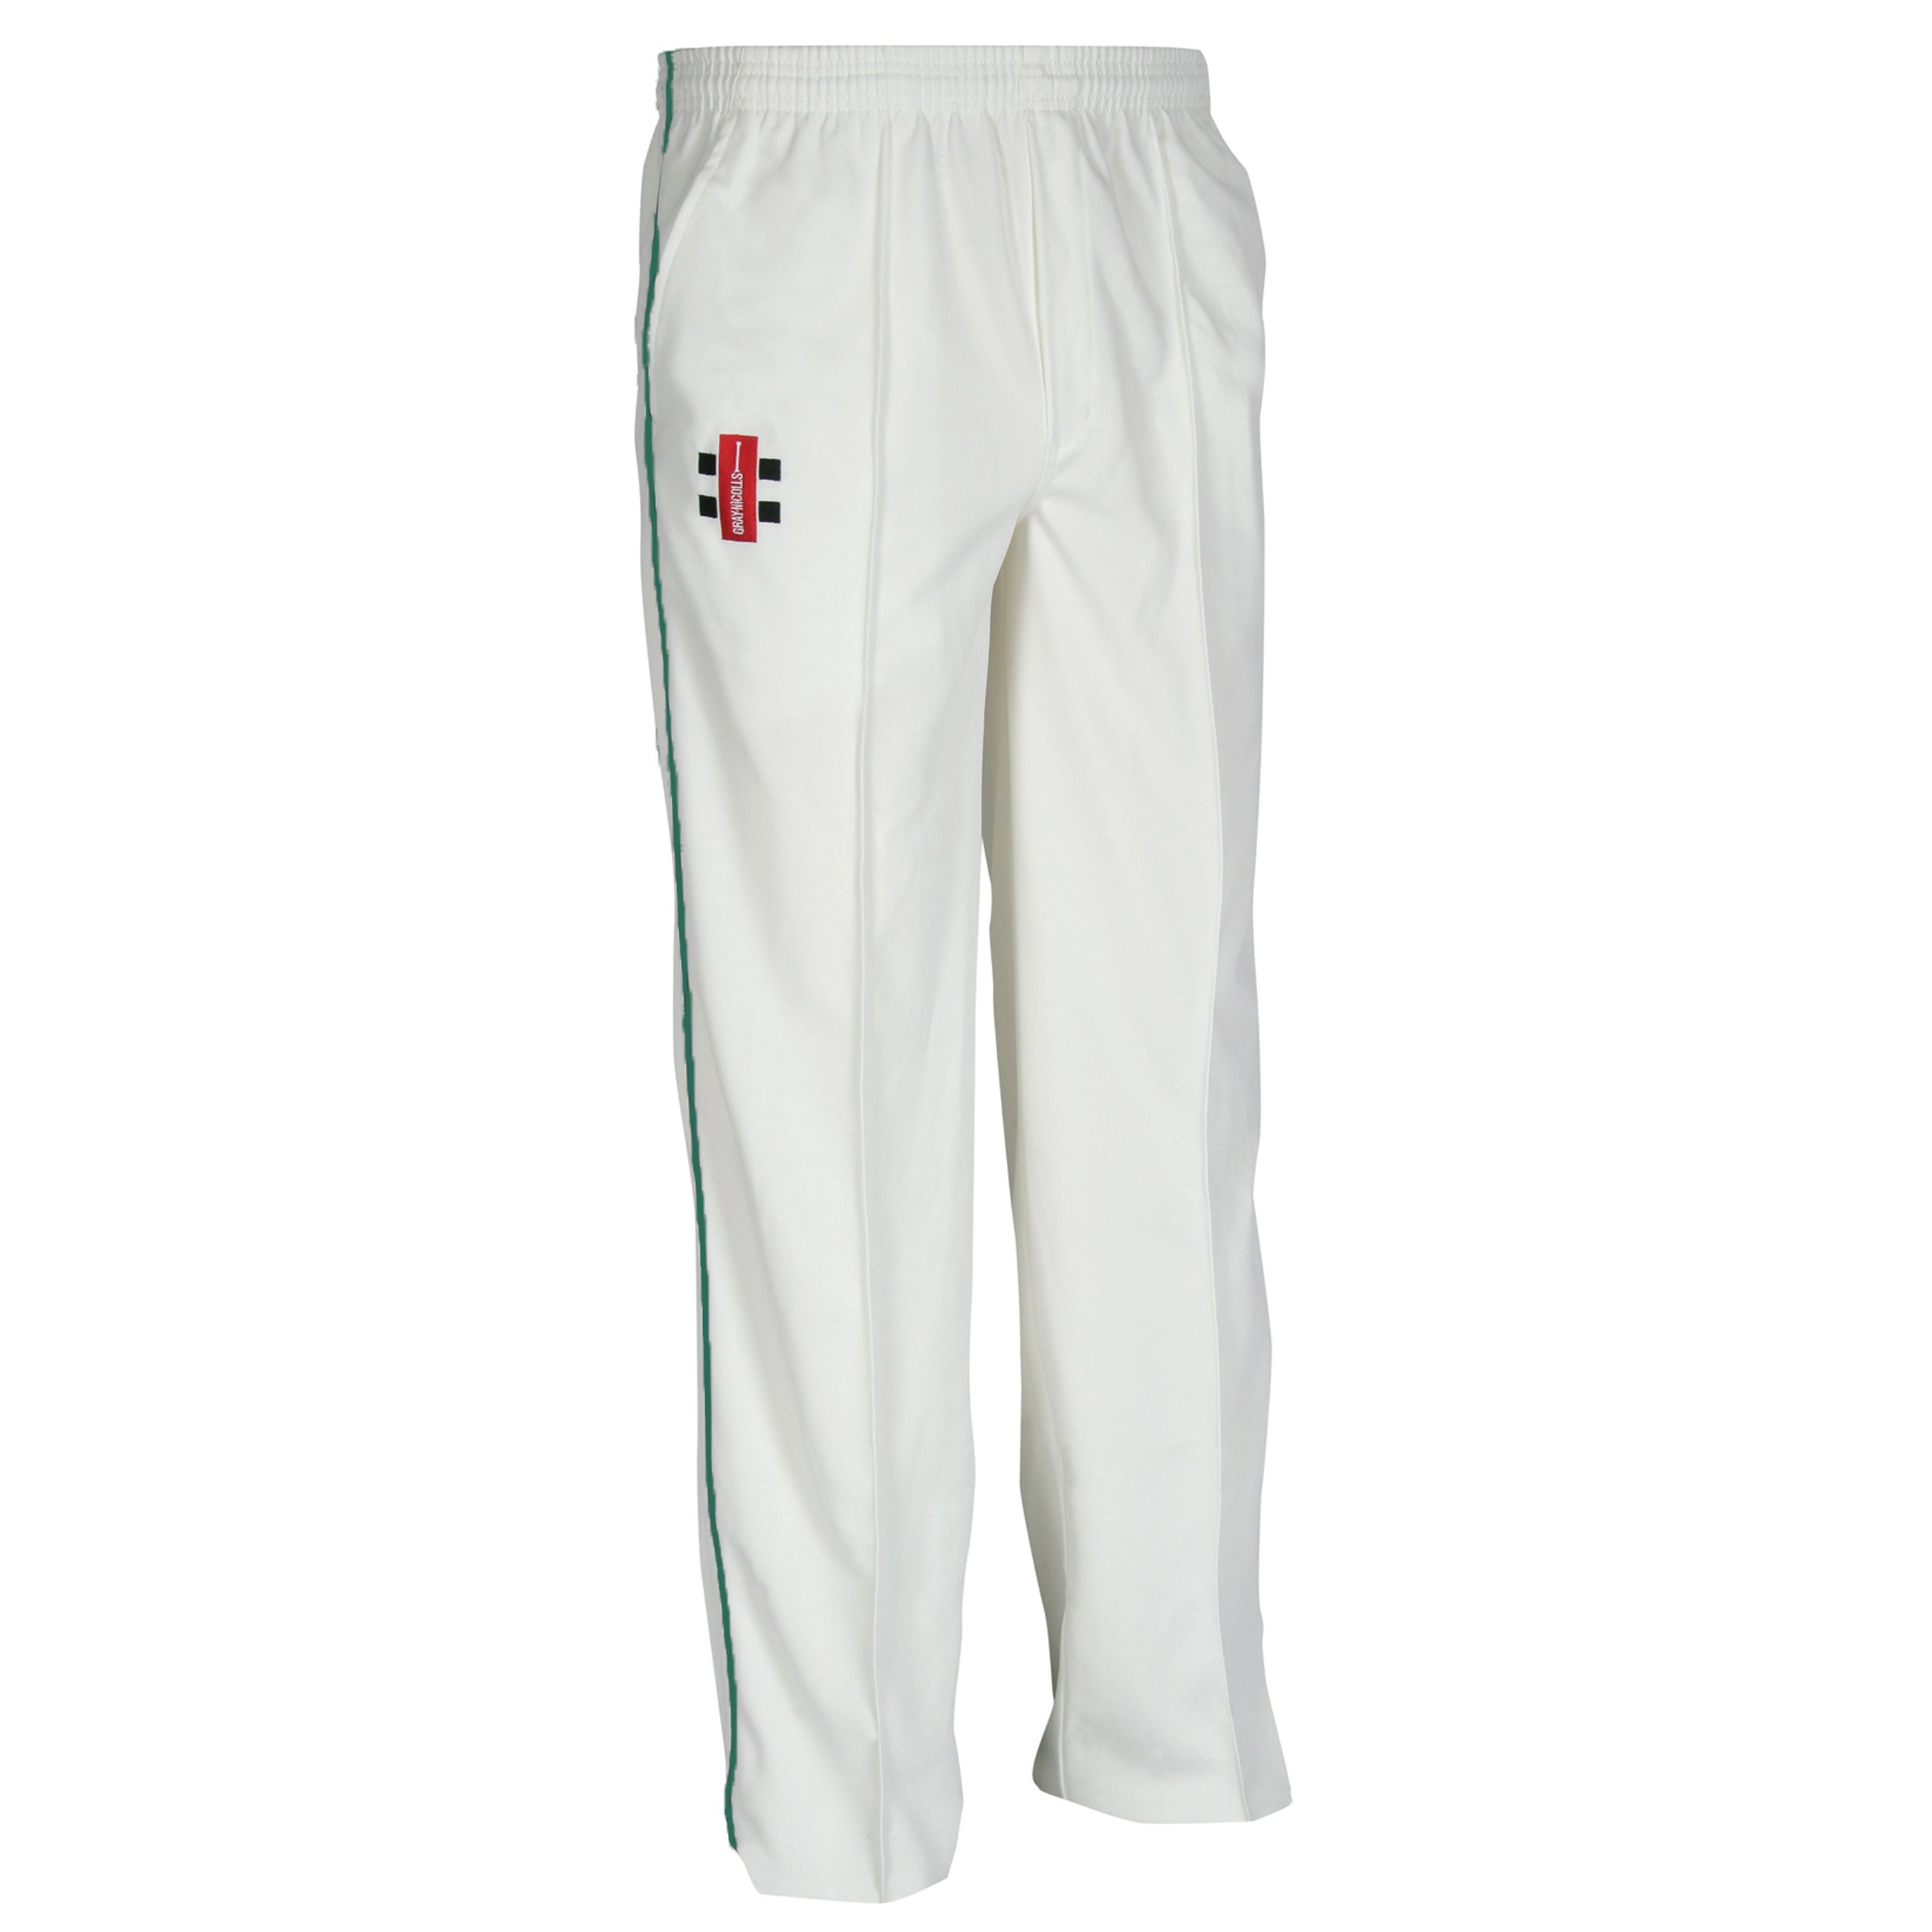 GRAY-NICOLLS SELECT WHITE Cricket Trousers Pants Senior Size S M L XL 2XL  3XL $29.99 - PicClick AU